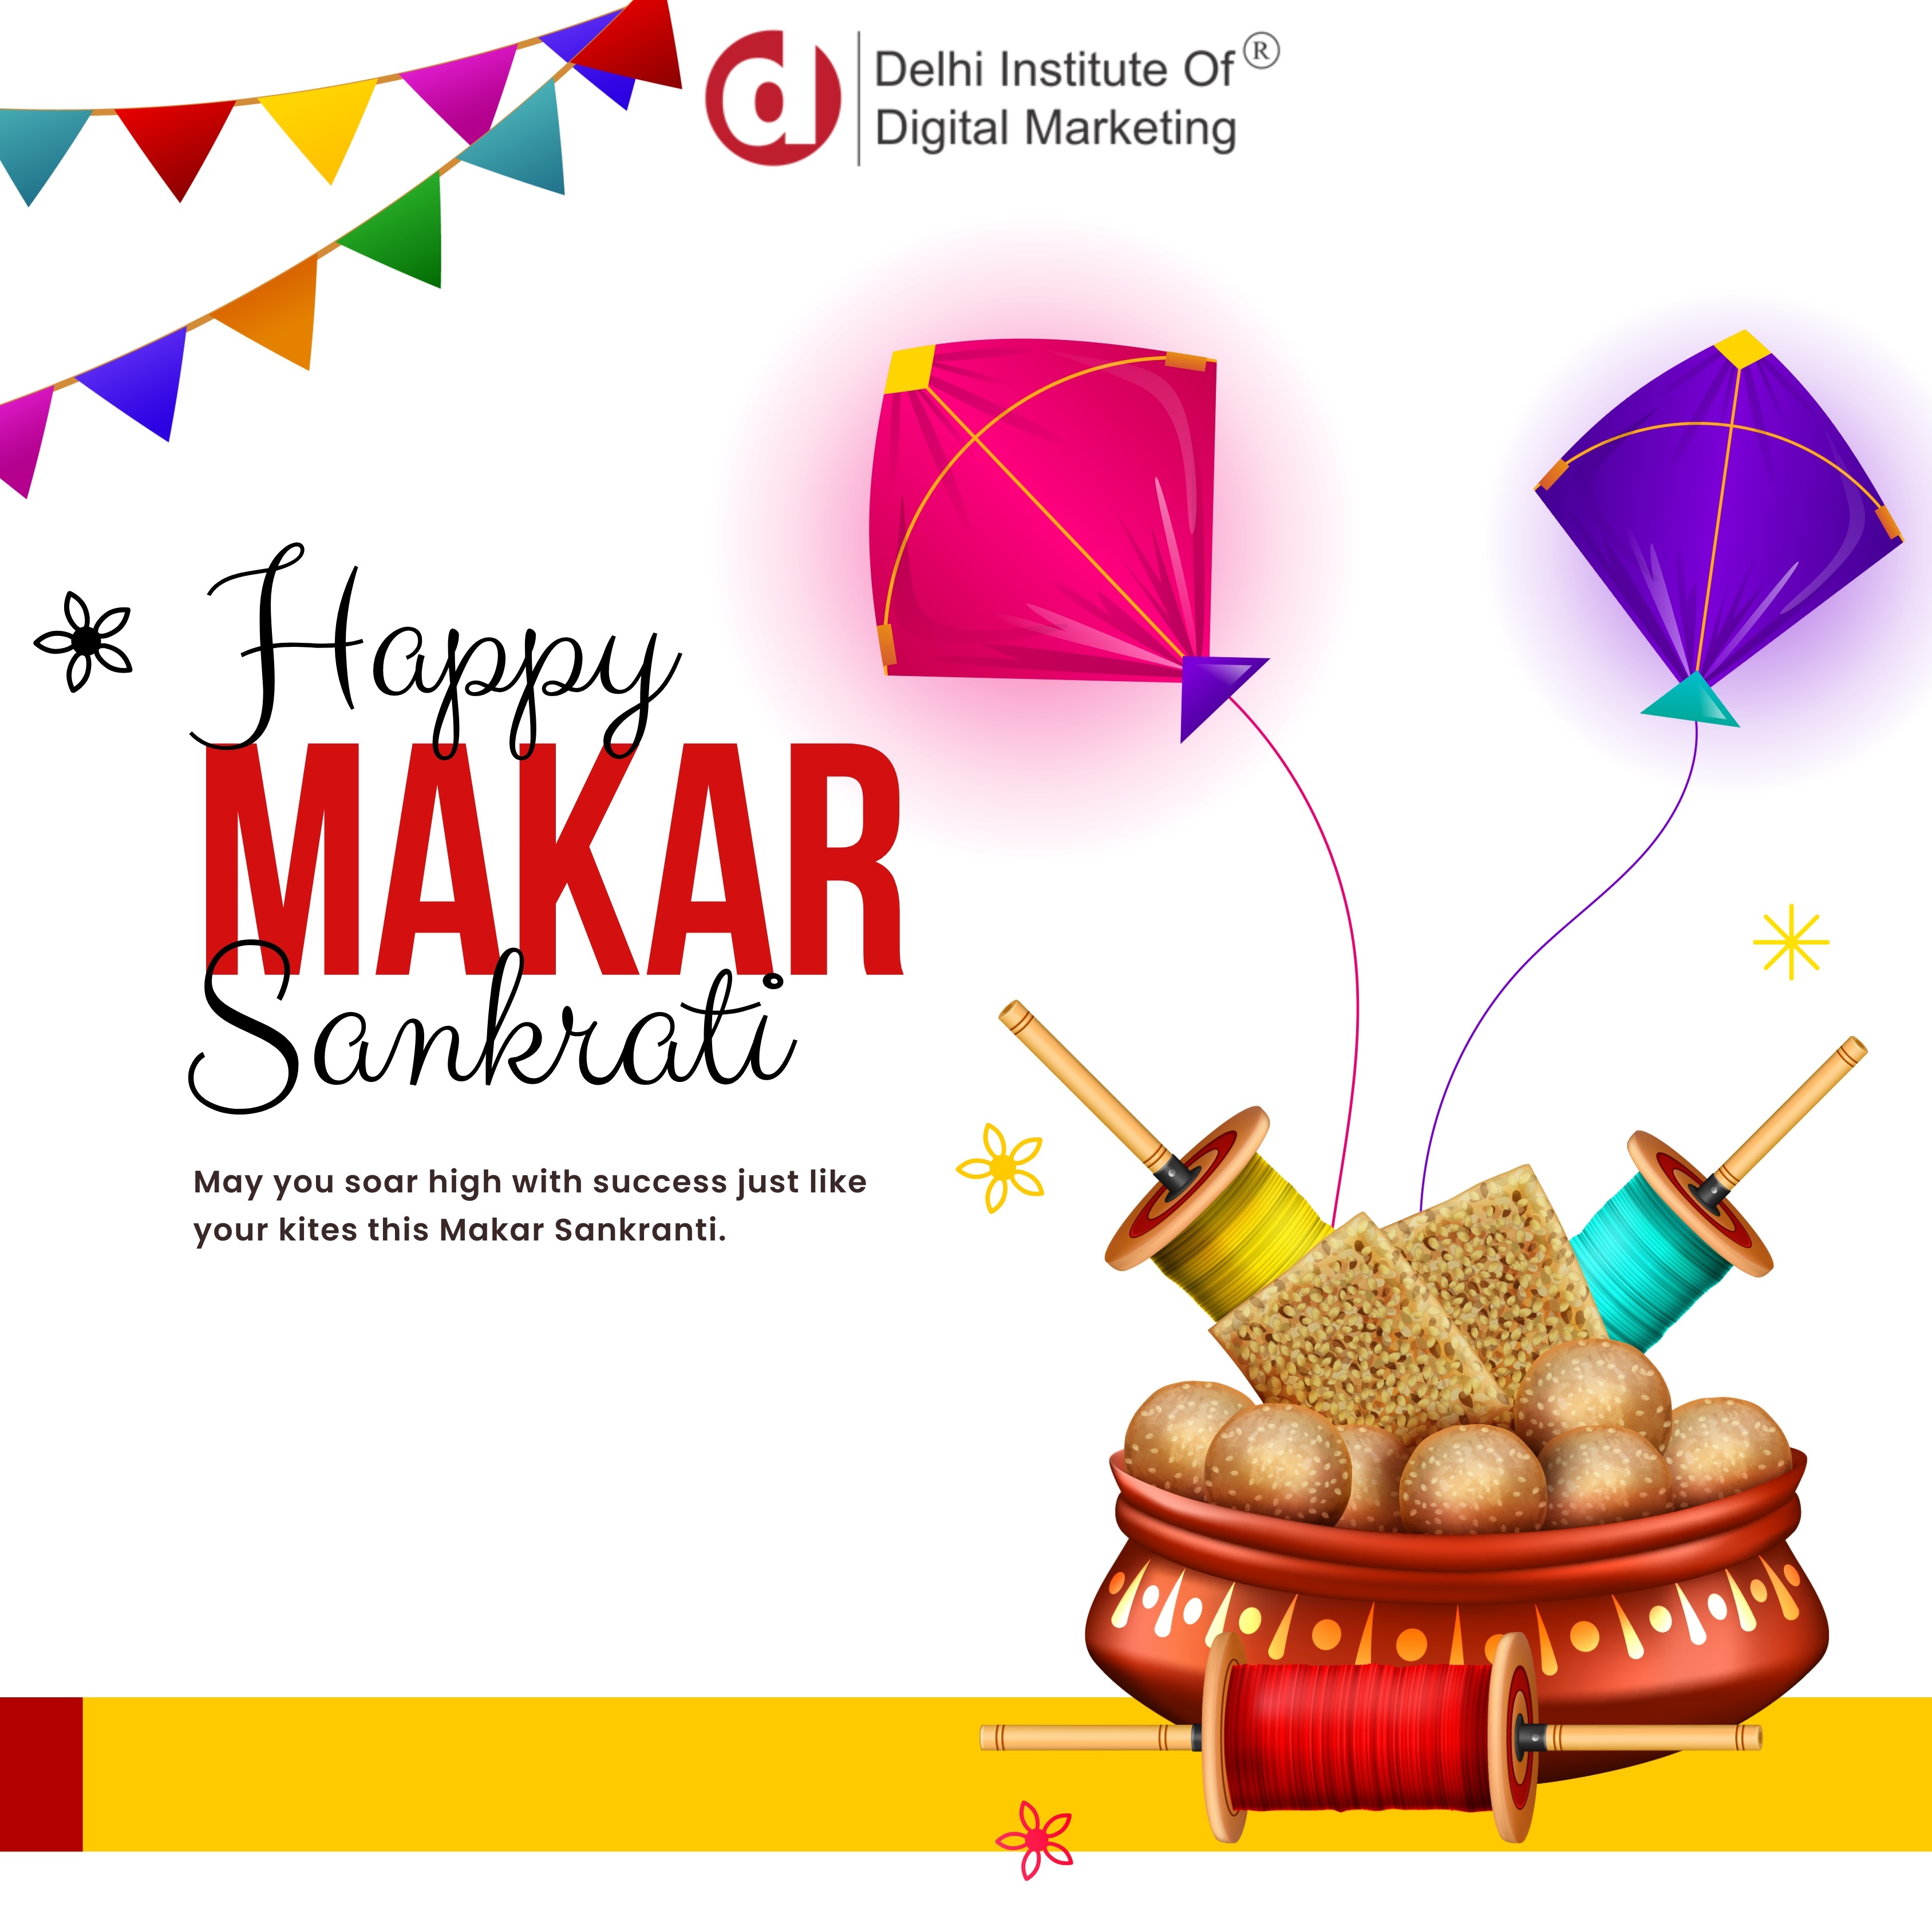 DIDM Wishes You A Very Happy Makar Sankranti.